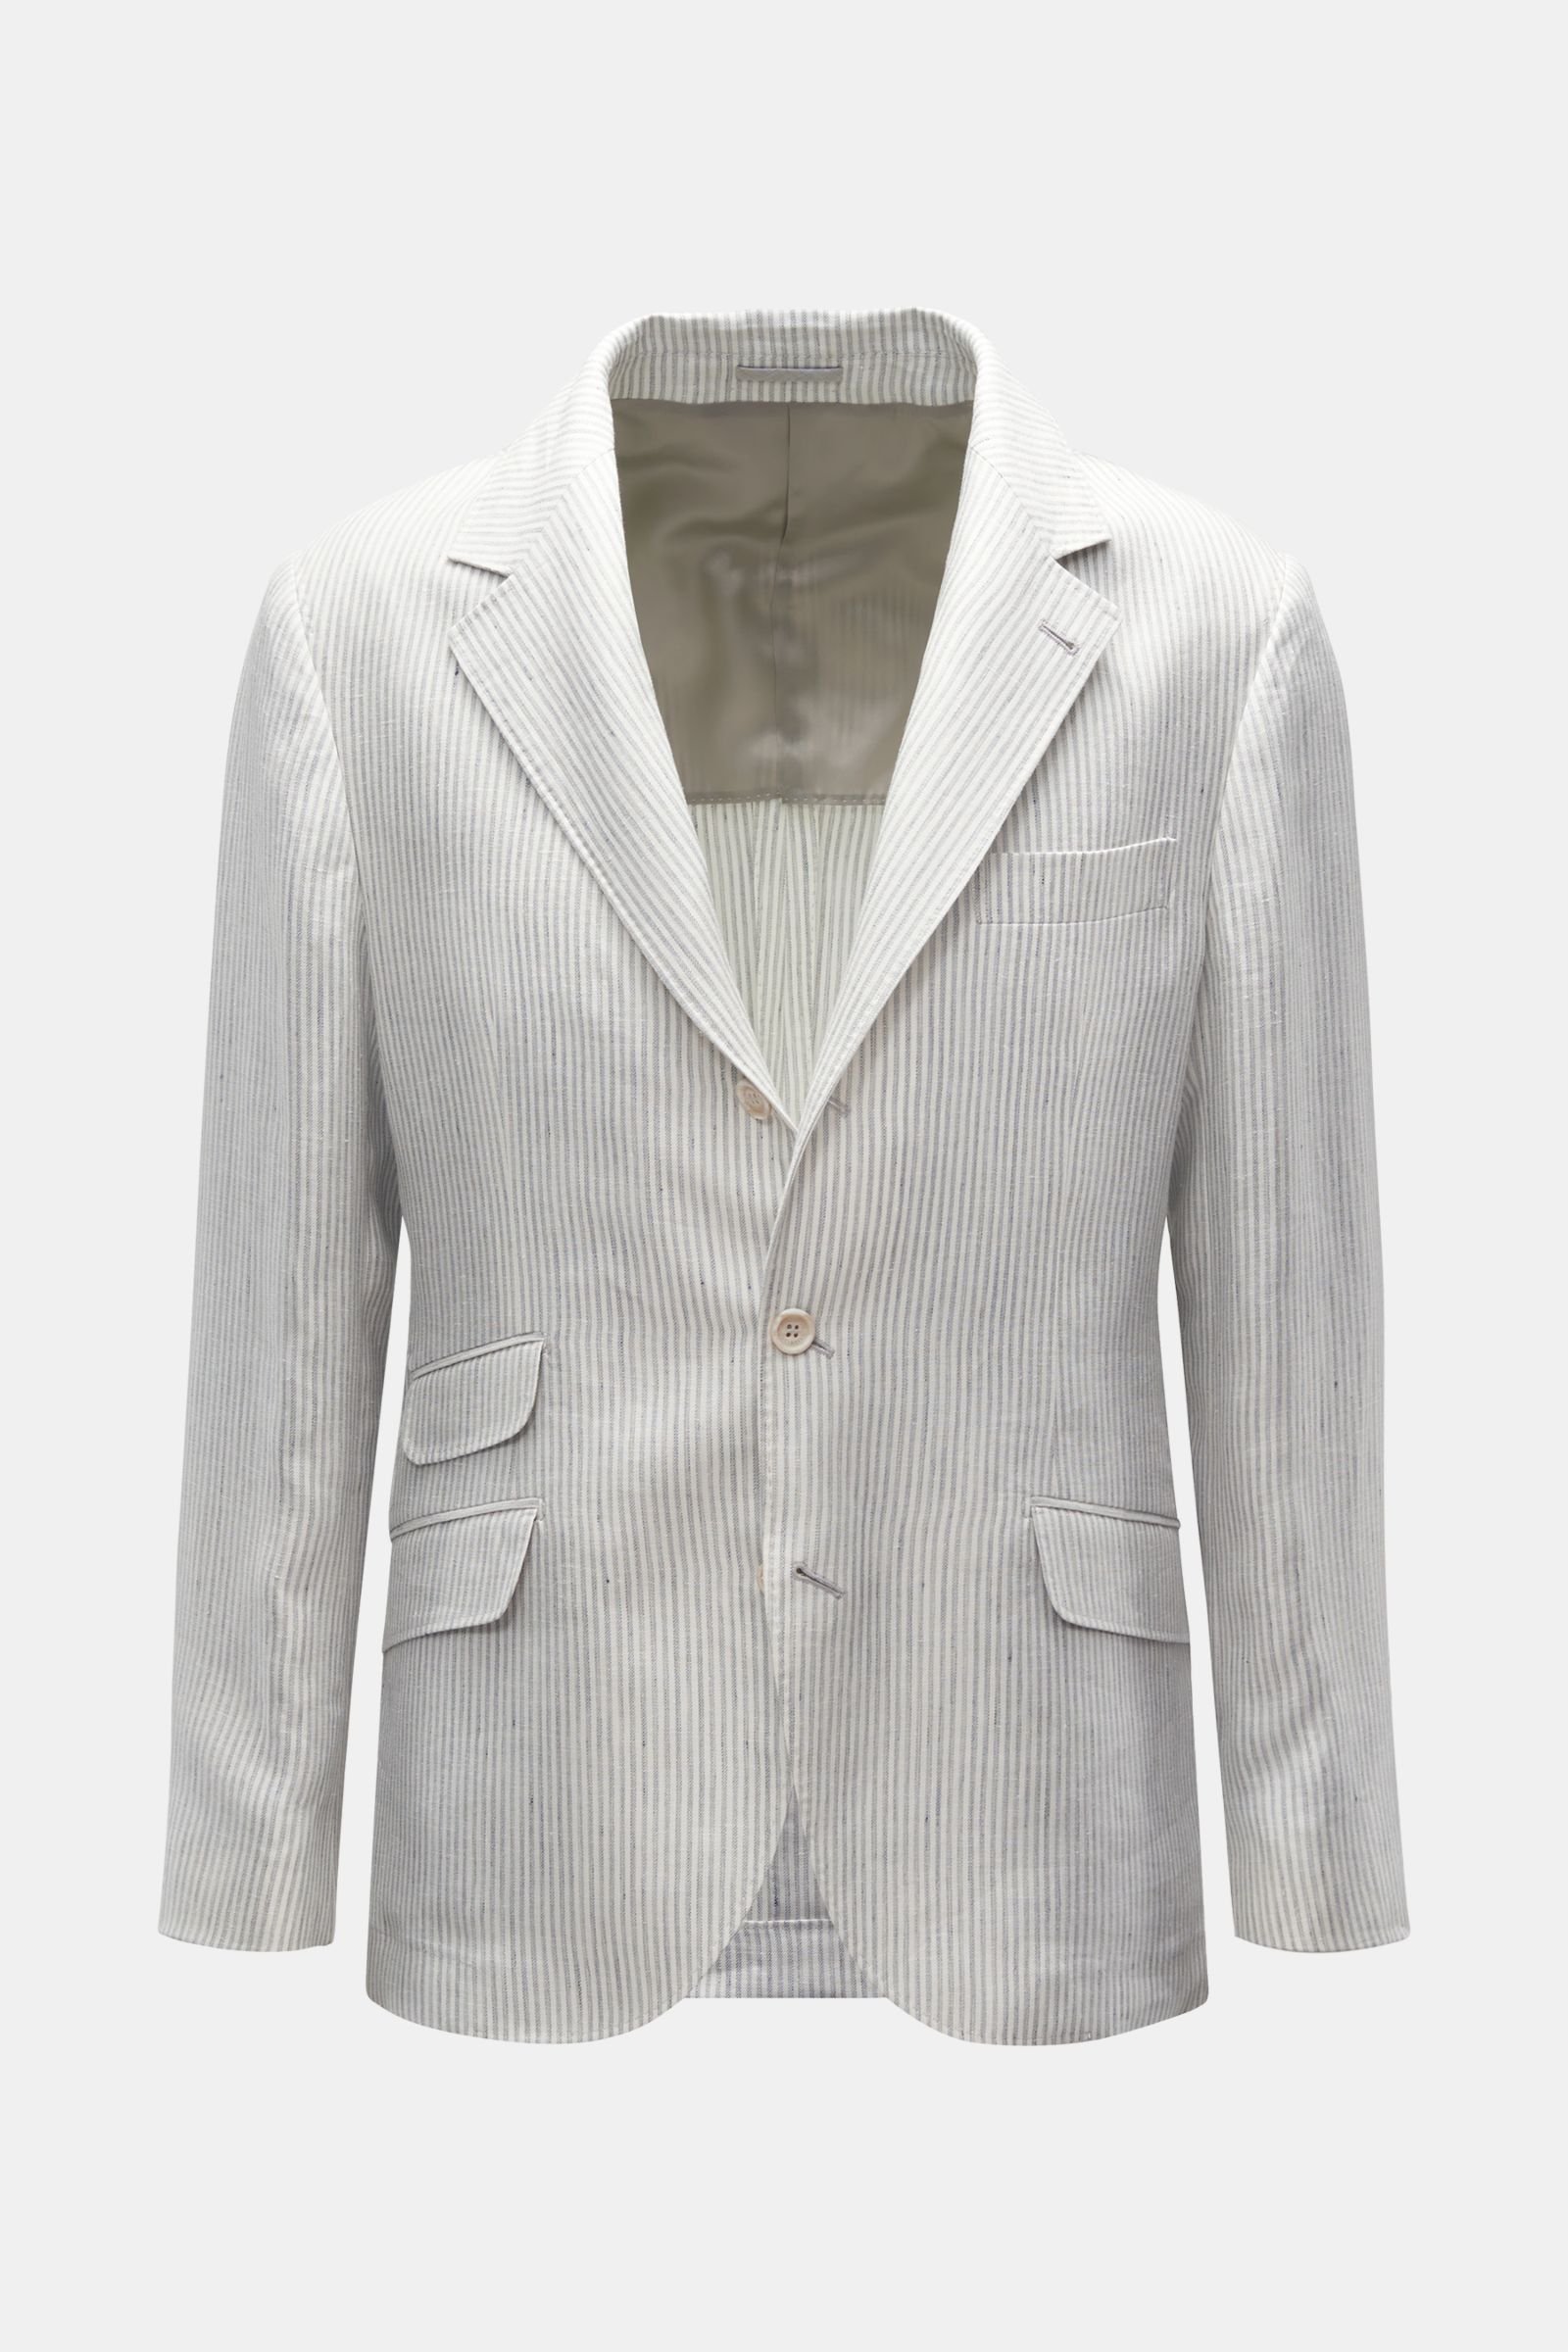 Linen jacket grey/white striped